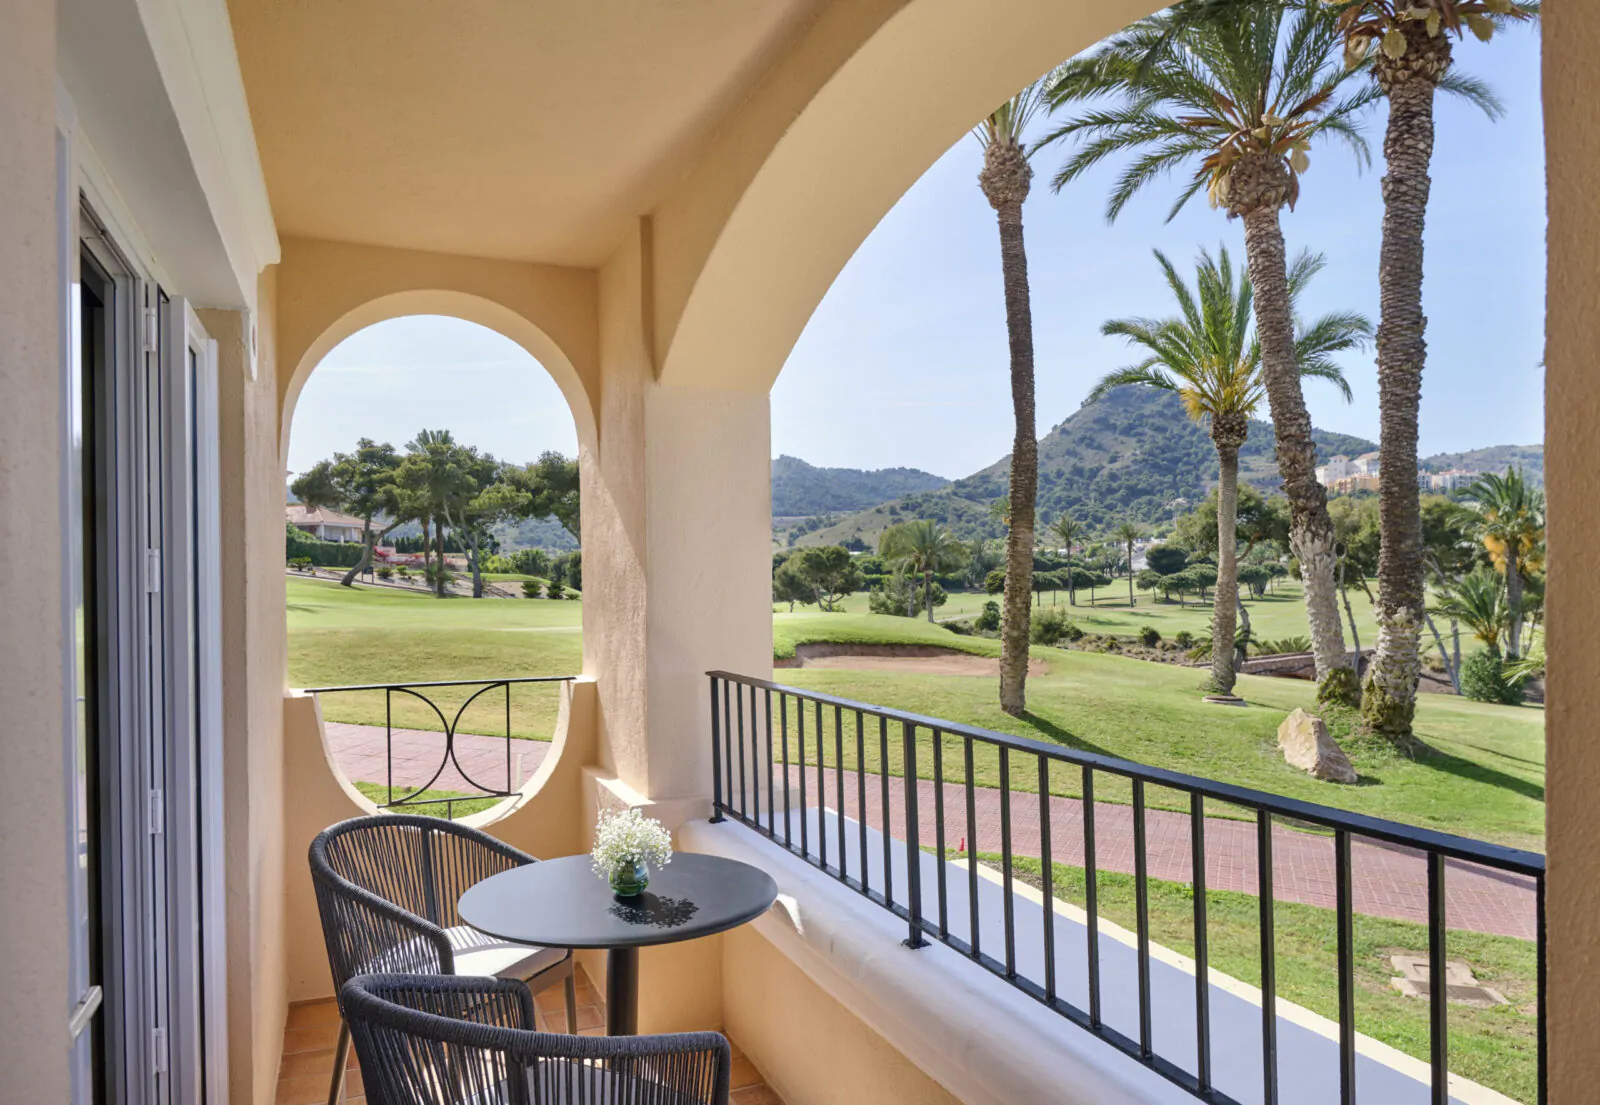 Grand-Hyatt-La-Manga-Club-Golf-&-Spa-Room-2-Twin-Beds-Golf-View-with-Balcony-table-terrace